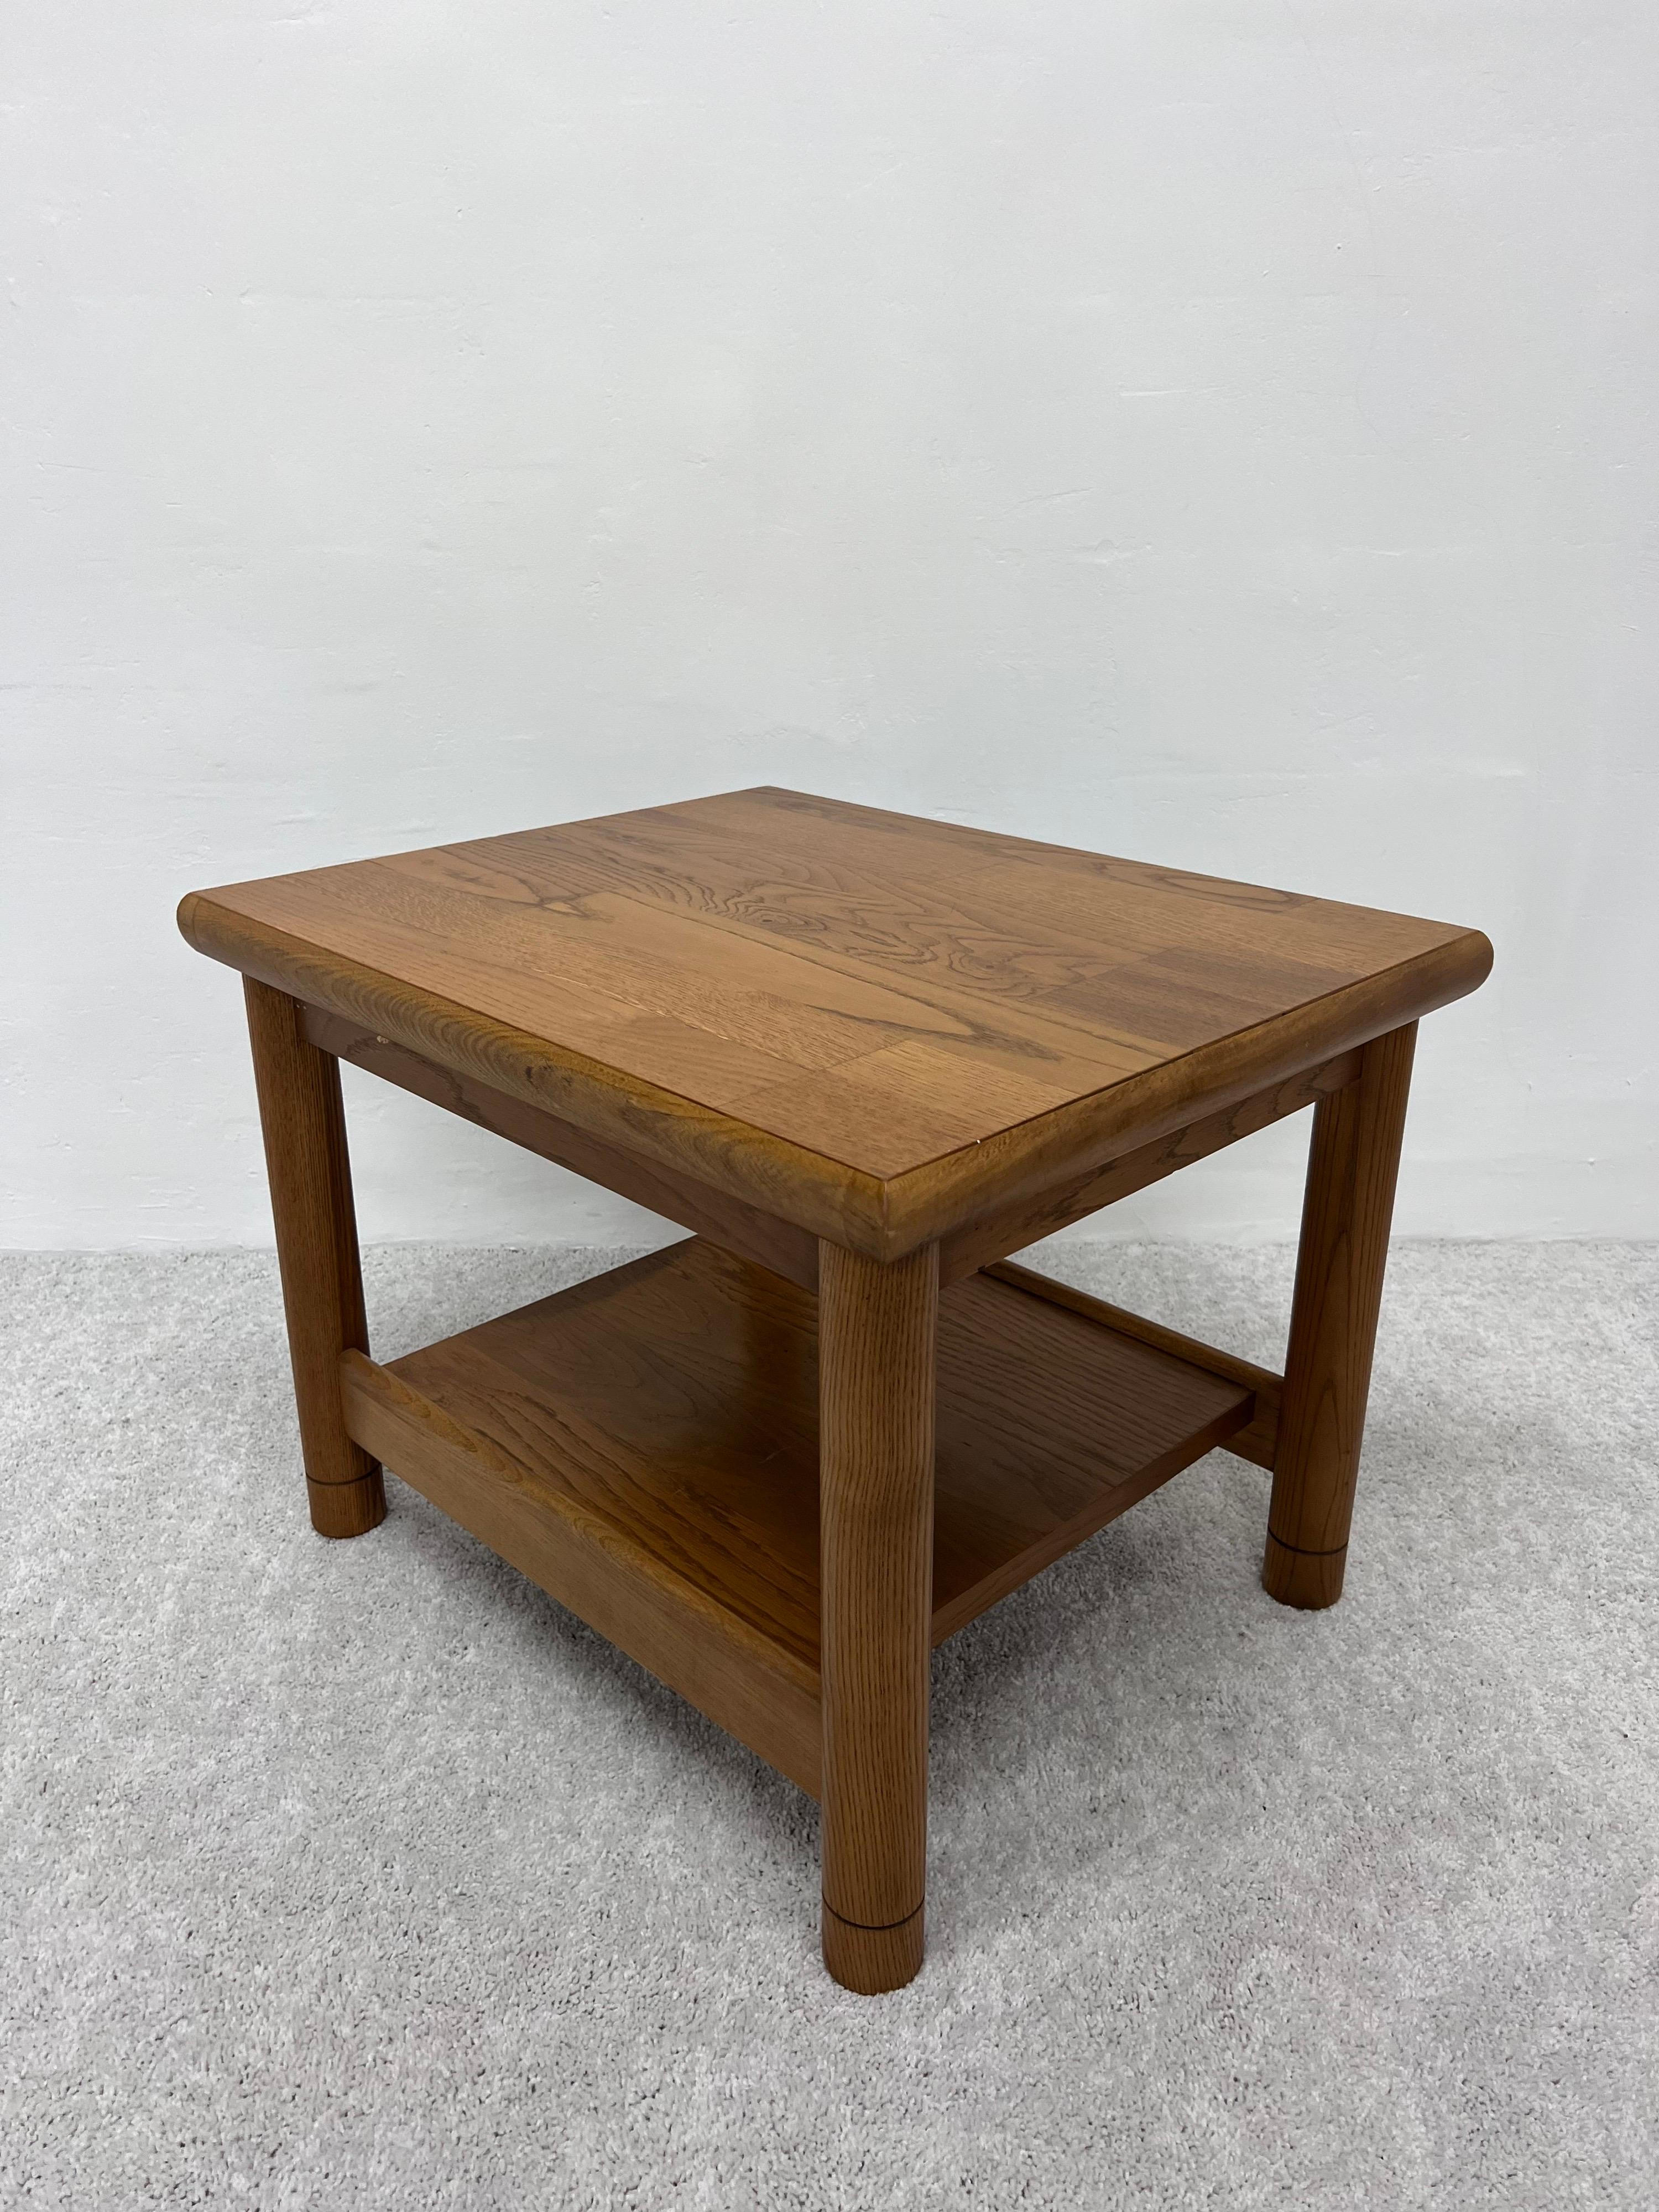 20th Century Mid-Century Lane Altavista Oak Side Tables, 1970s - a Pair For Sale